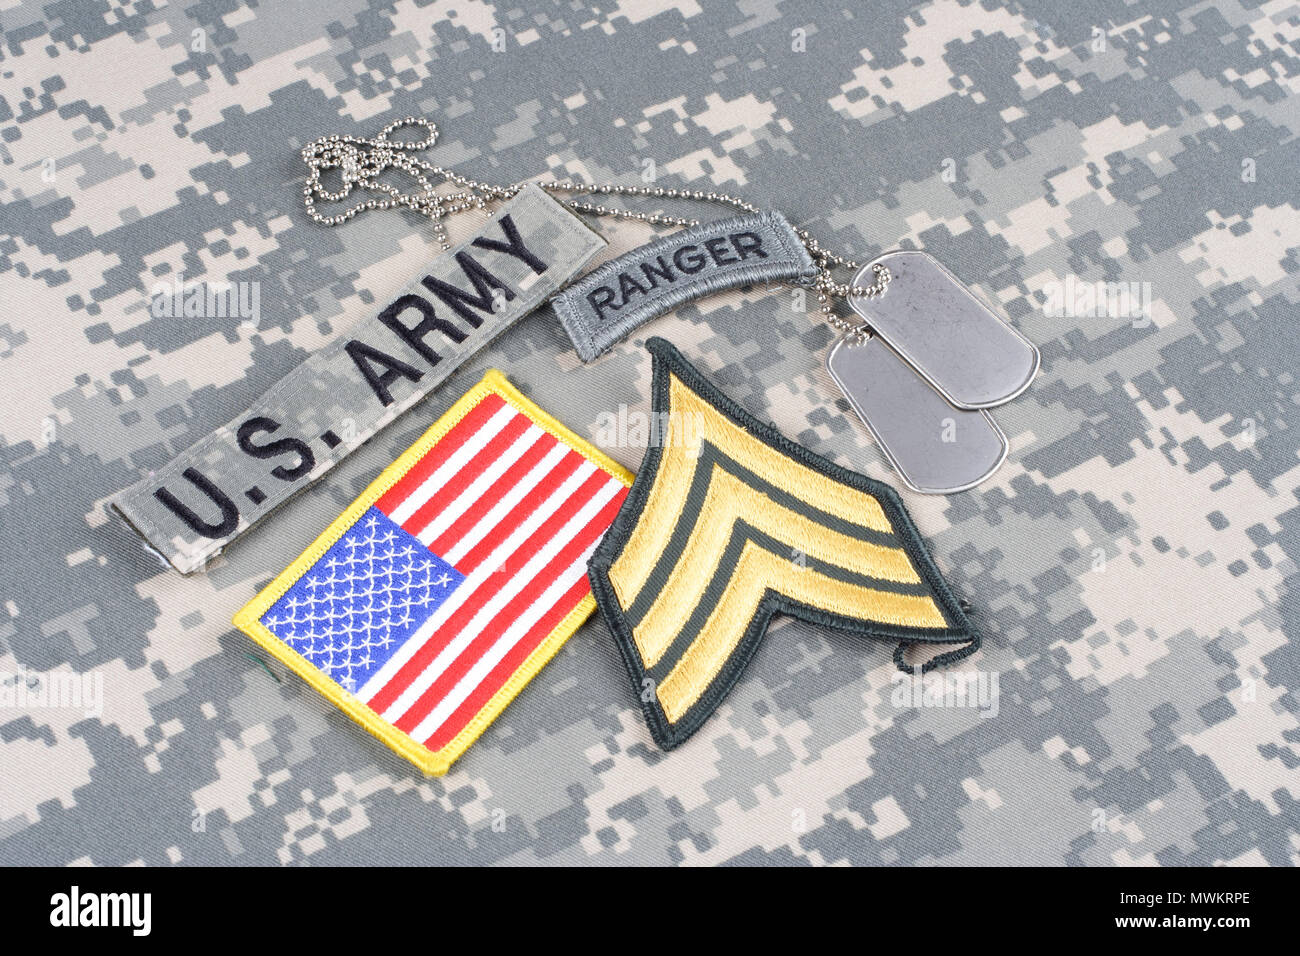 KIEV, UKRAINE - August 21, 2015. US ARMY ranger insignia on camouflage uniform Stock Photo